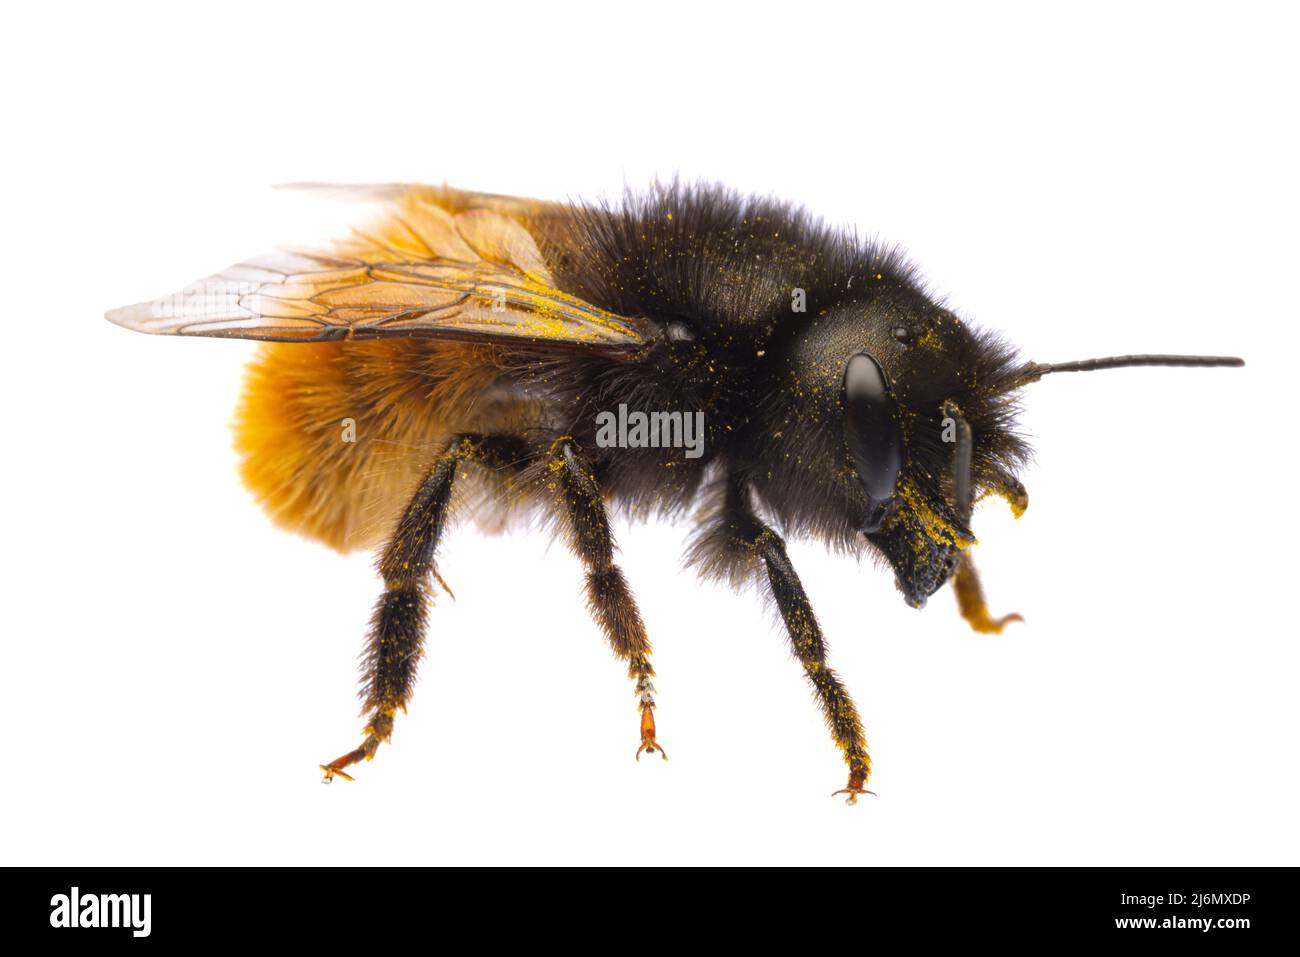 Insectos de europa - abejas: Macro vista lateral de la hembra Osmia cornuta Abeja de huerta europea (gehoernte Mauerbiene alemán) aislada sobre fondo blanco Foto de stock